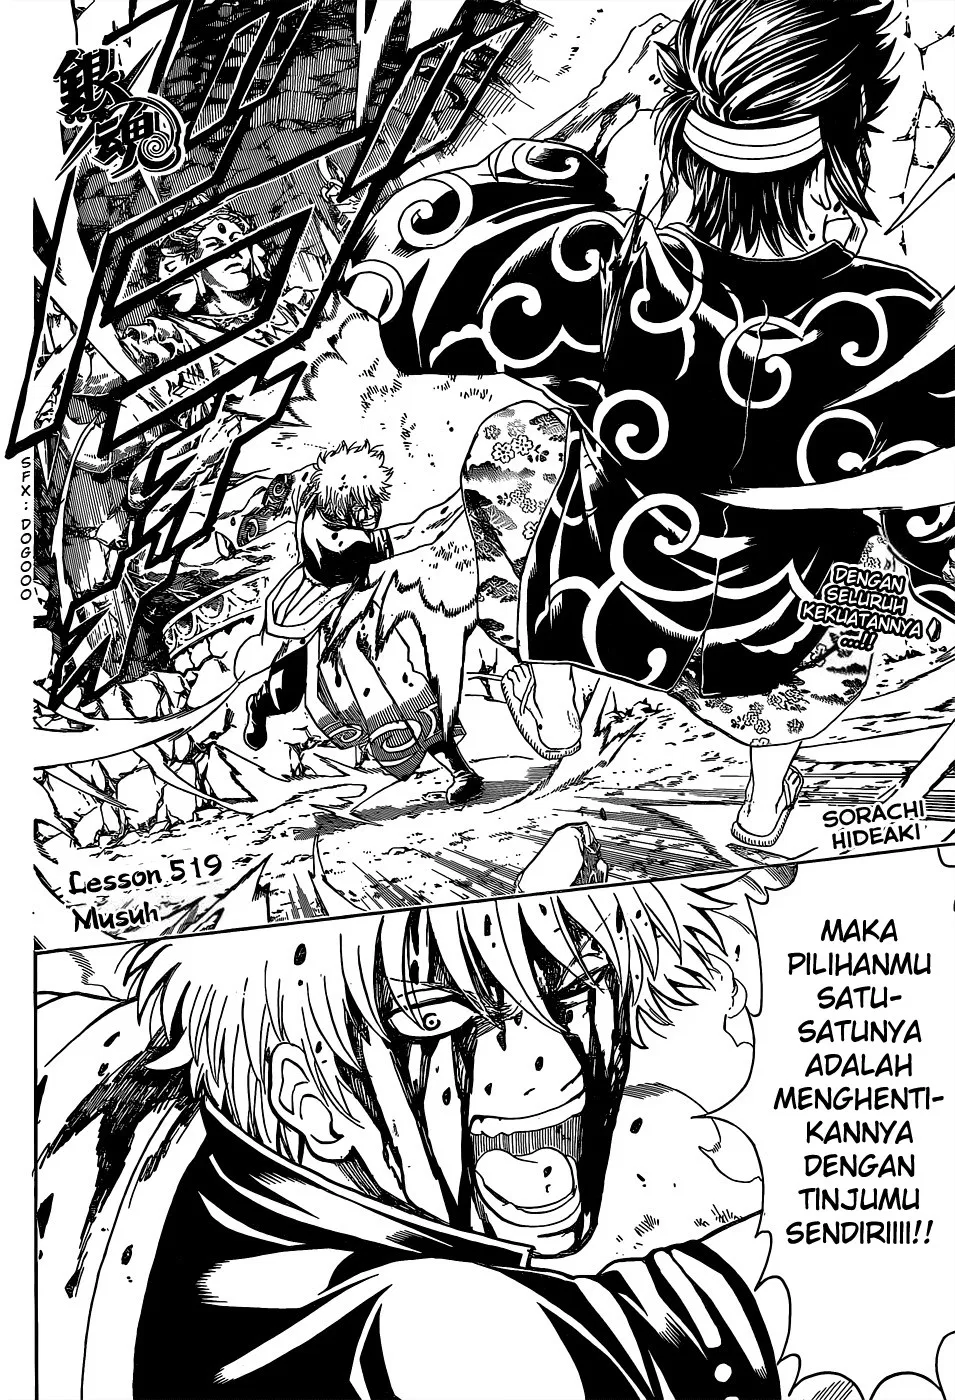 Gintama Chapter 519